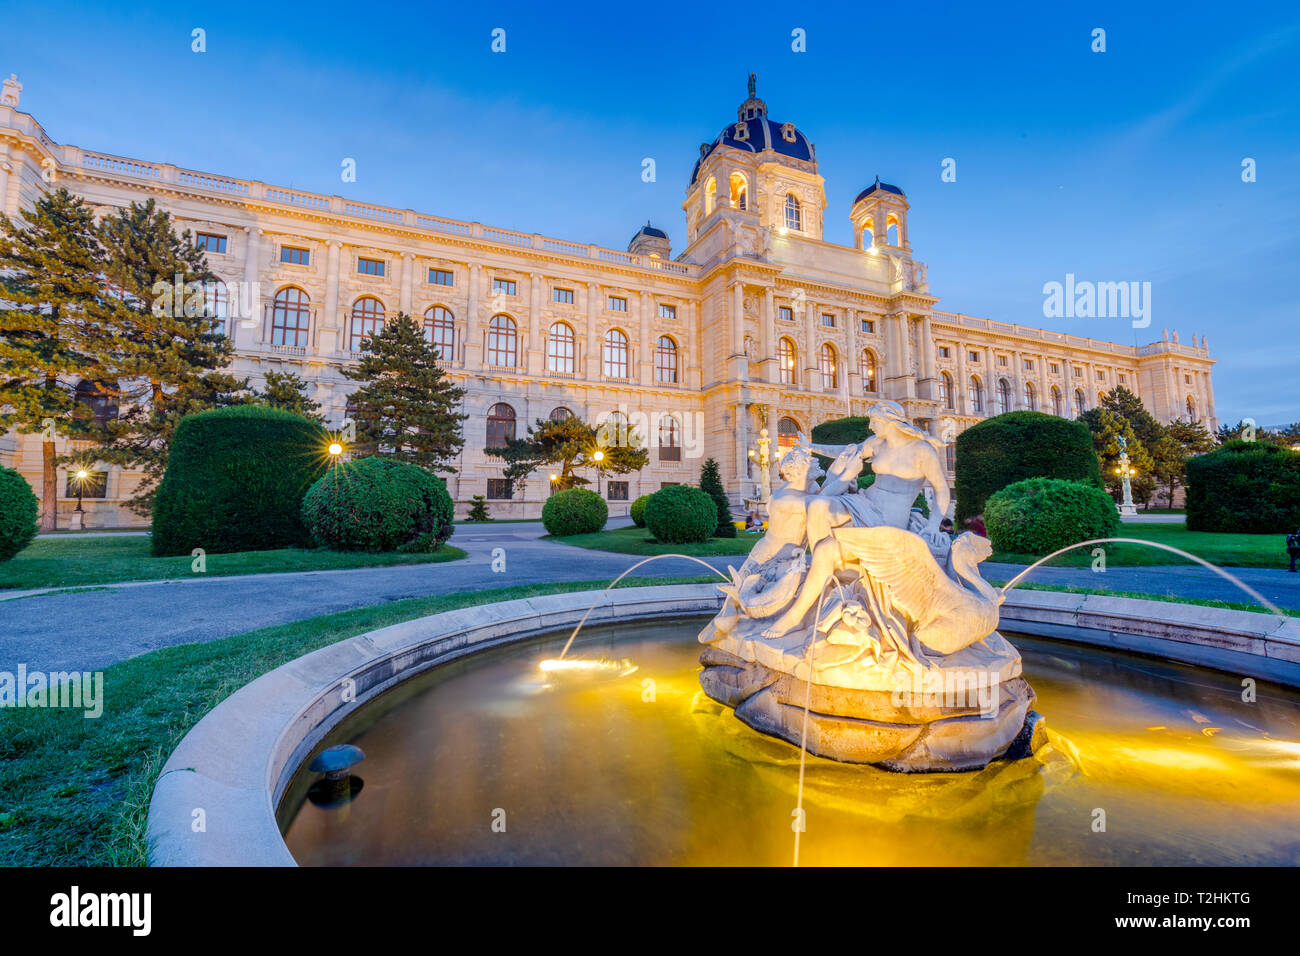 Kunsthistorisches Museum (Art History) and fountain at dusk, Vienna, Austria, Europe Stock Photo